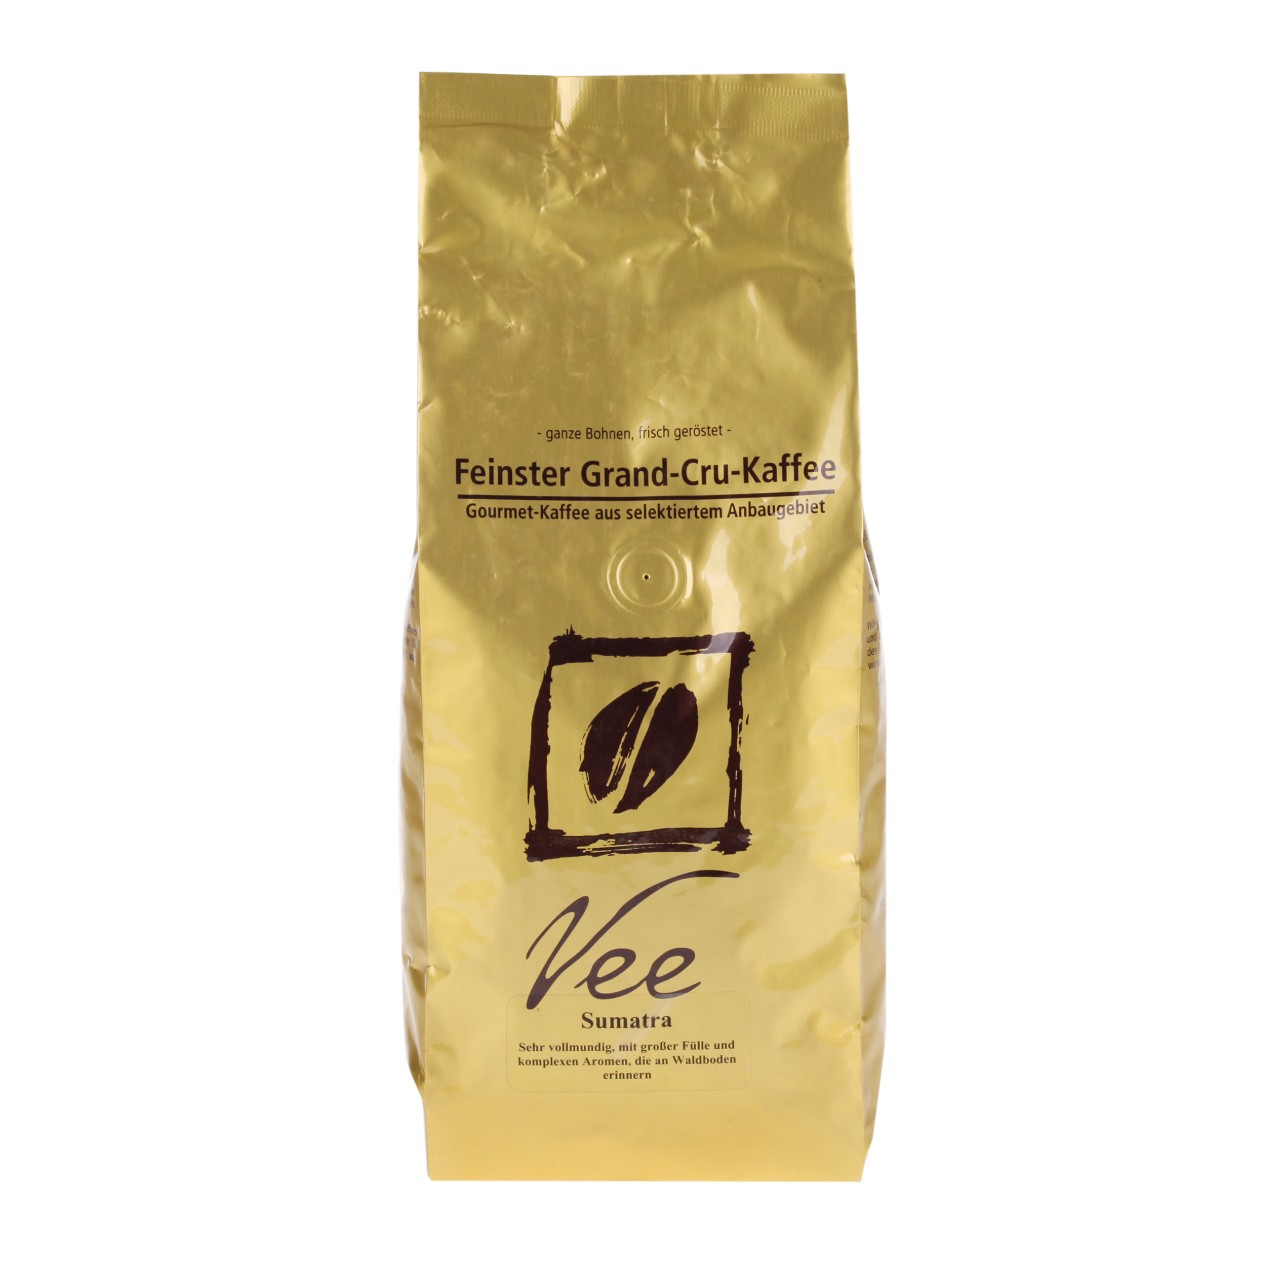 Vee Coffee Sumatra